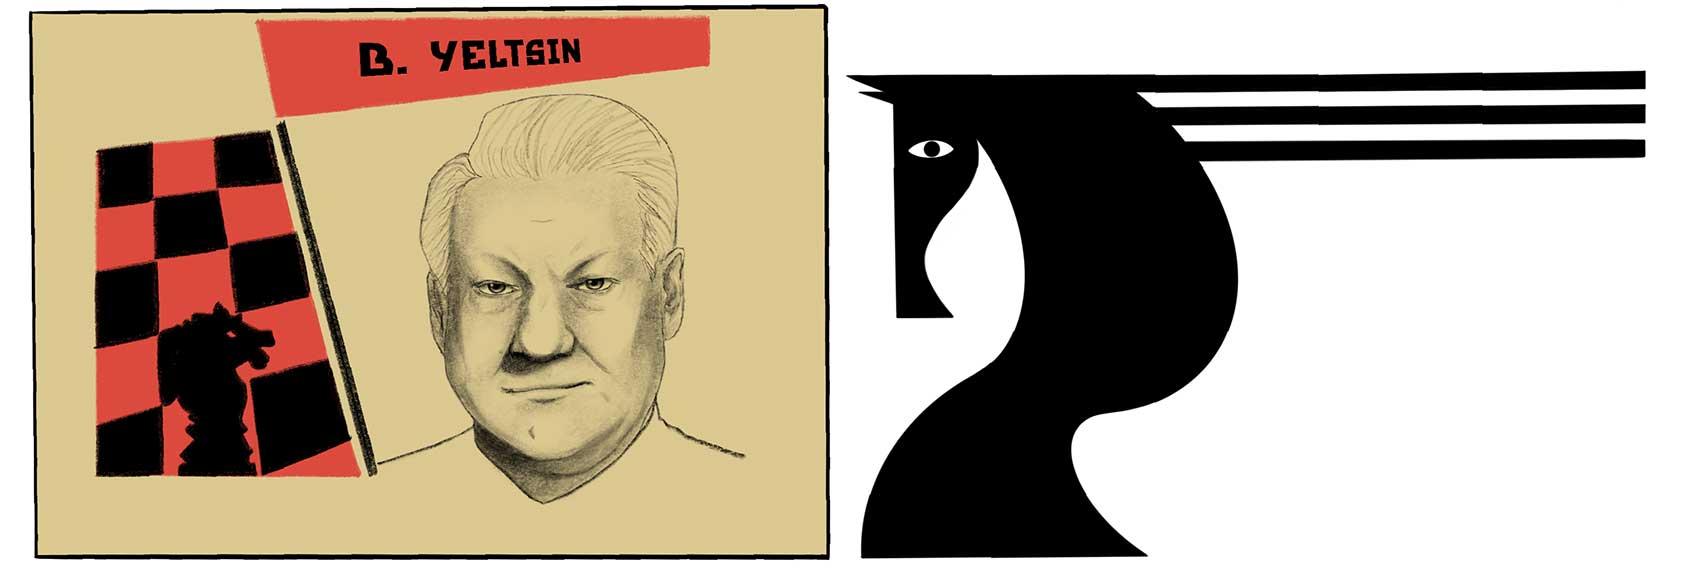 Drawing of Boris Yeltsin against chess-themed backdrop